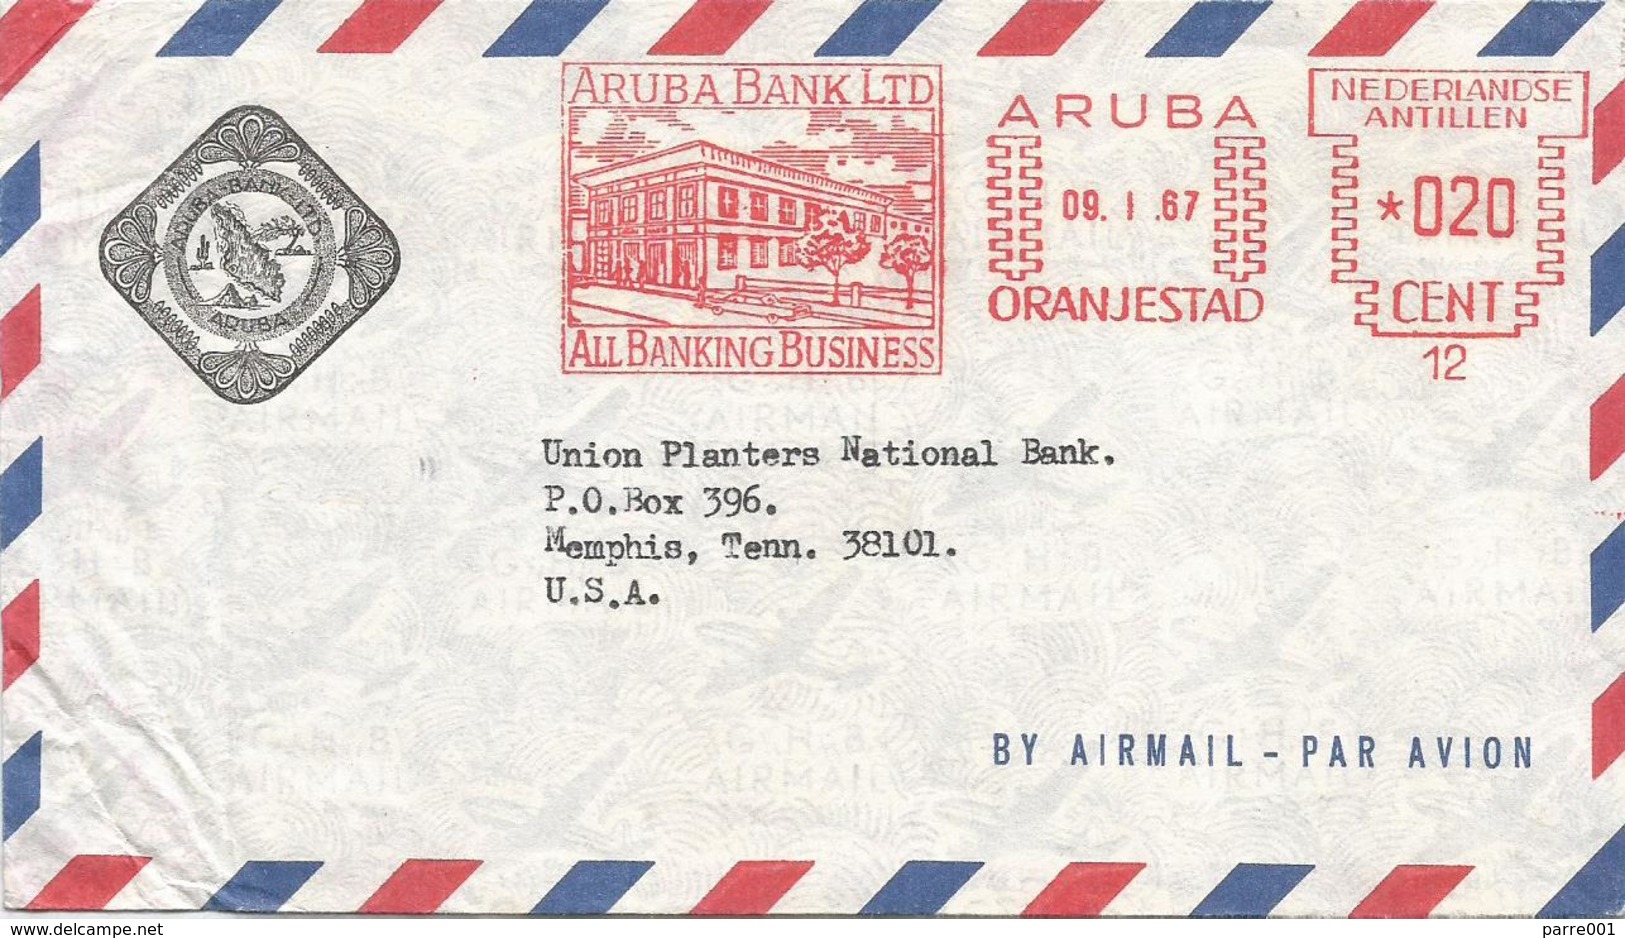 Aruba 1967 Oranjestad Meter Francotyp “Cc” 12 Slogan Bank Cover - Curacao, Netherlands Antilles, Aruba